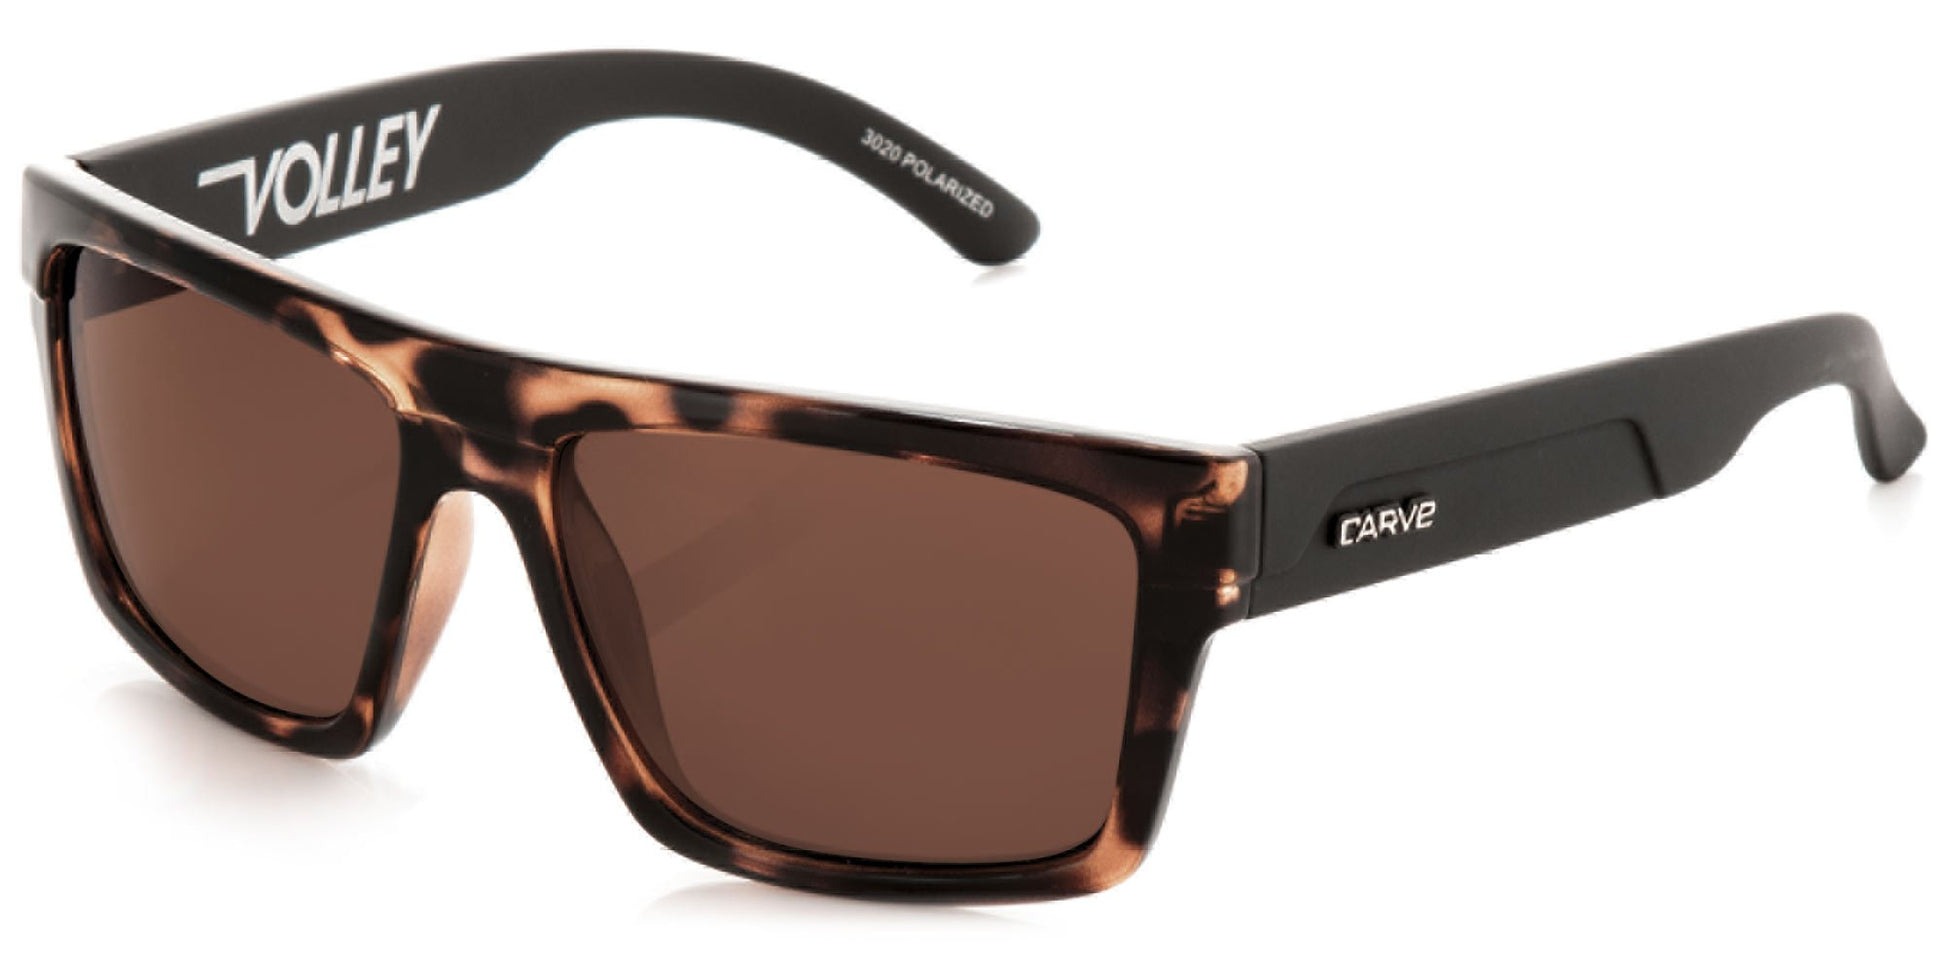 Carve Volley Sunglasses - Ast Colors Polarized Sunglasses Tort Matte Black Polarized